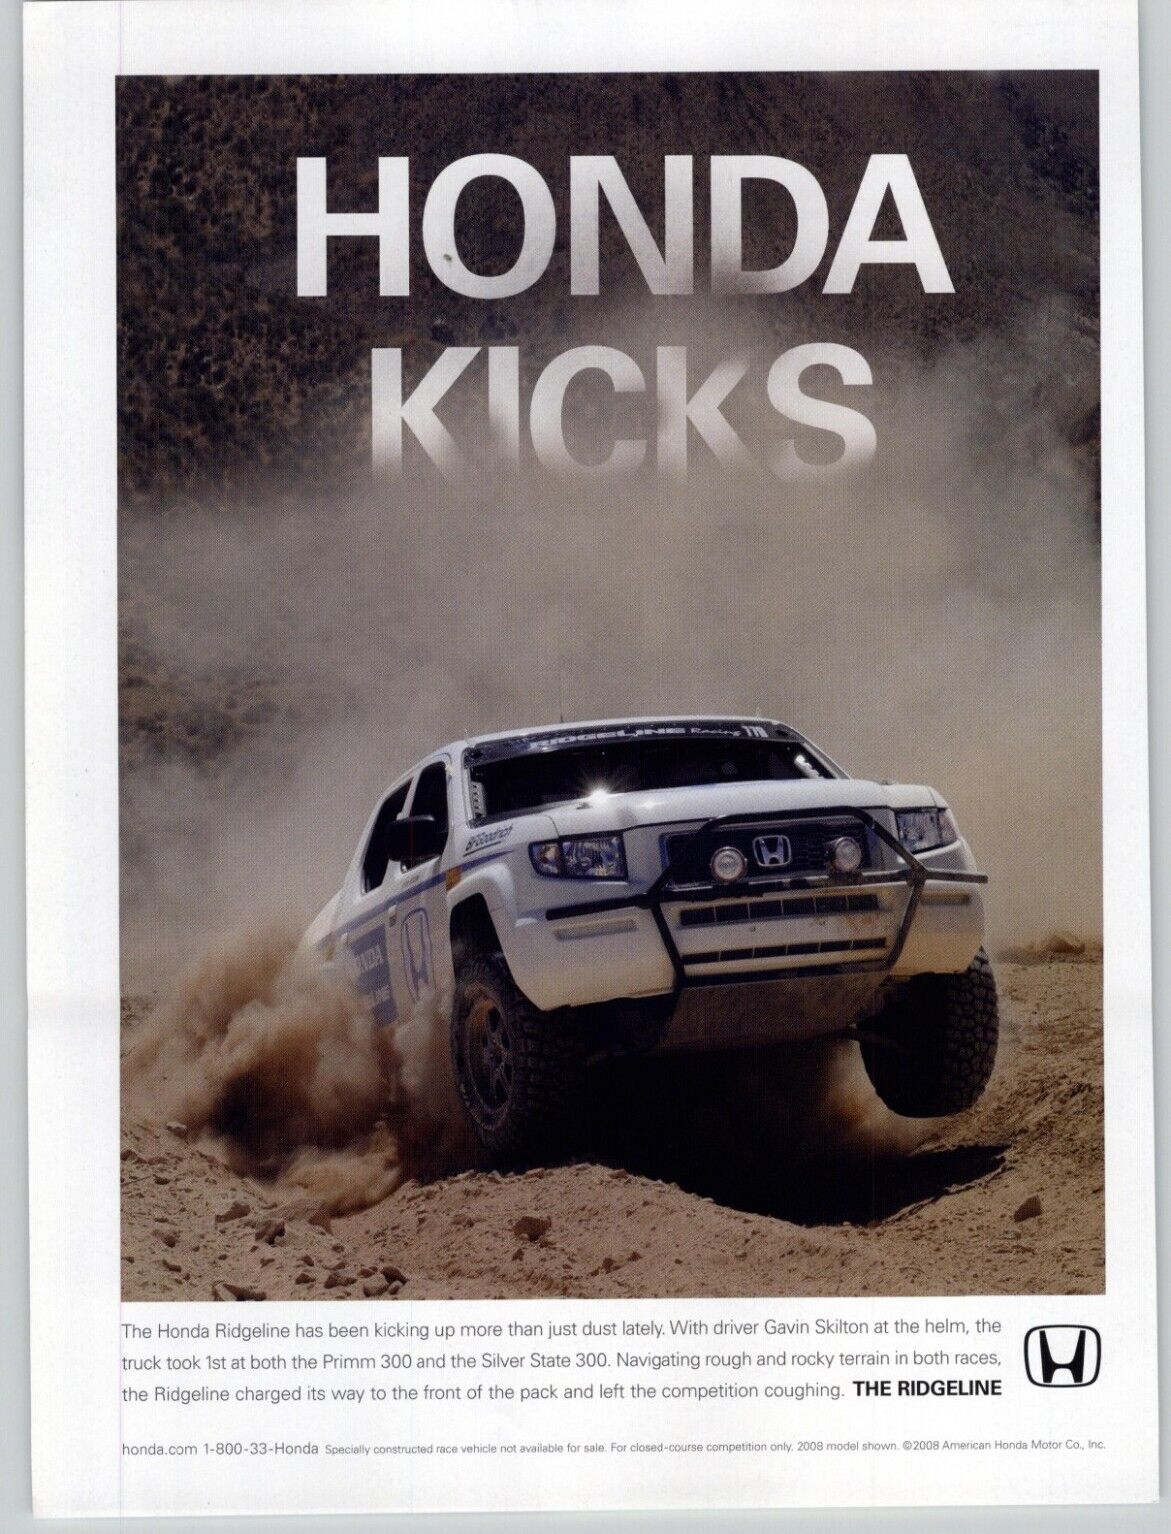 2008 White Honda Ridgeline Pick Up Truck Off Road Racing Photo Vintage Print Ad 